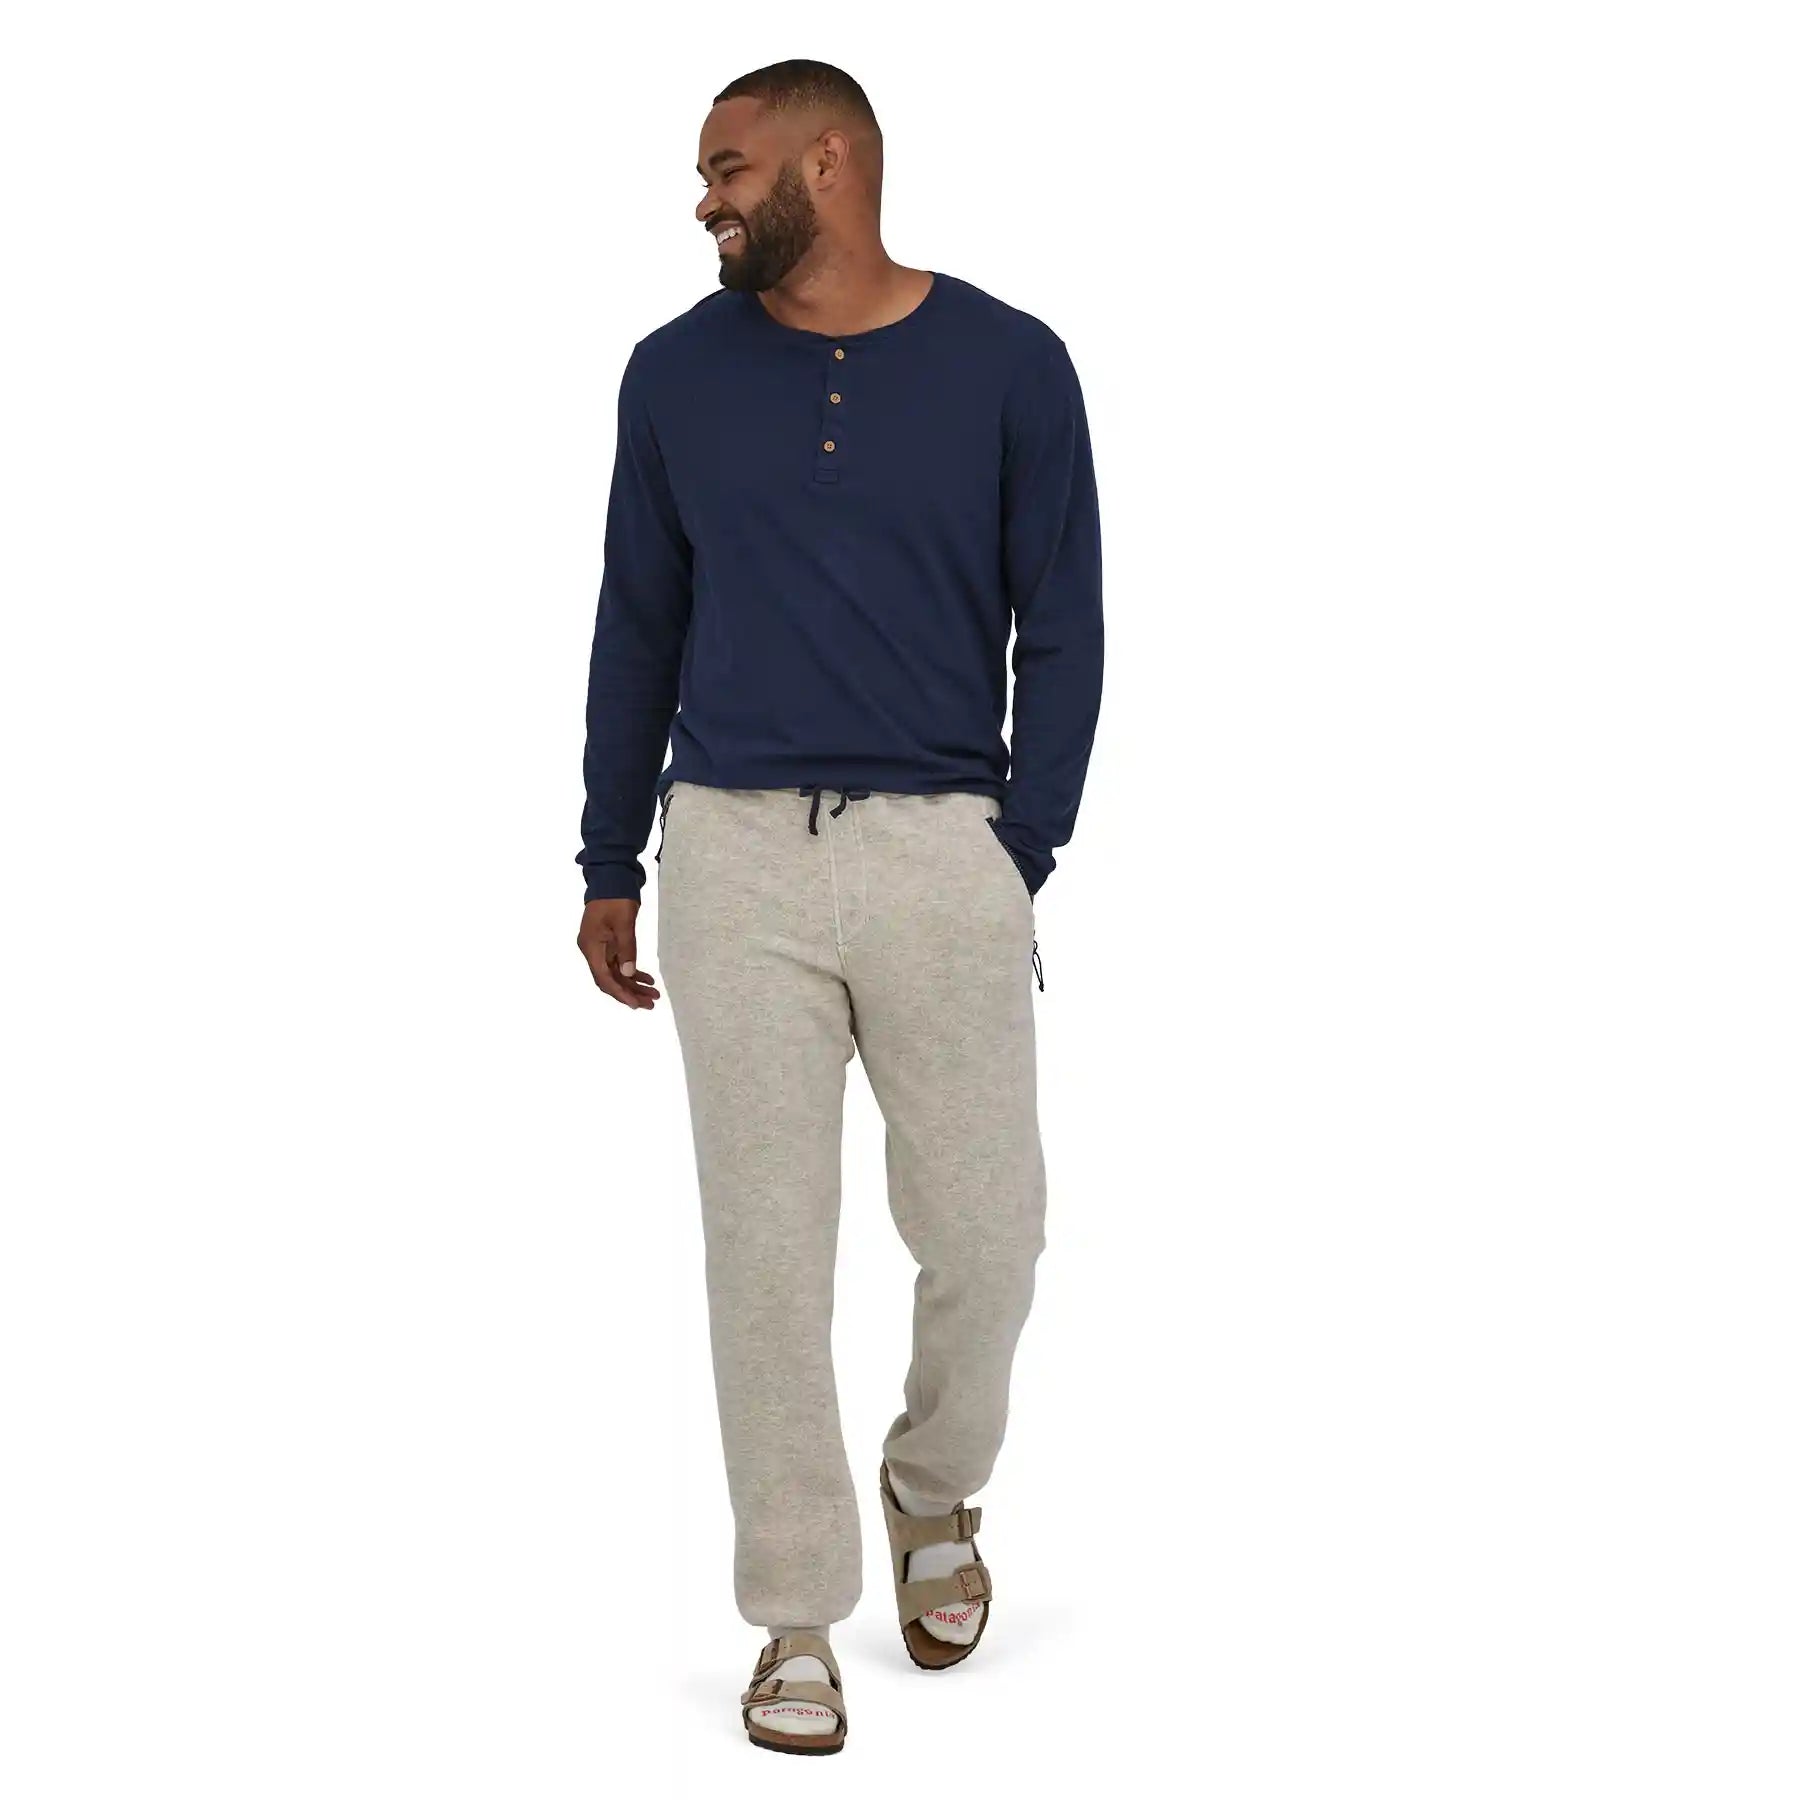 Patagonia Men's Synchilla Snap-T pants, nickel, 56675-NKL – Norwood